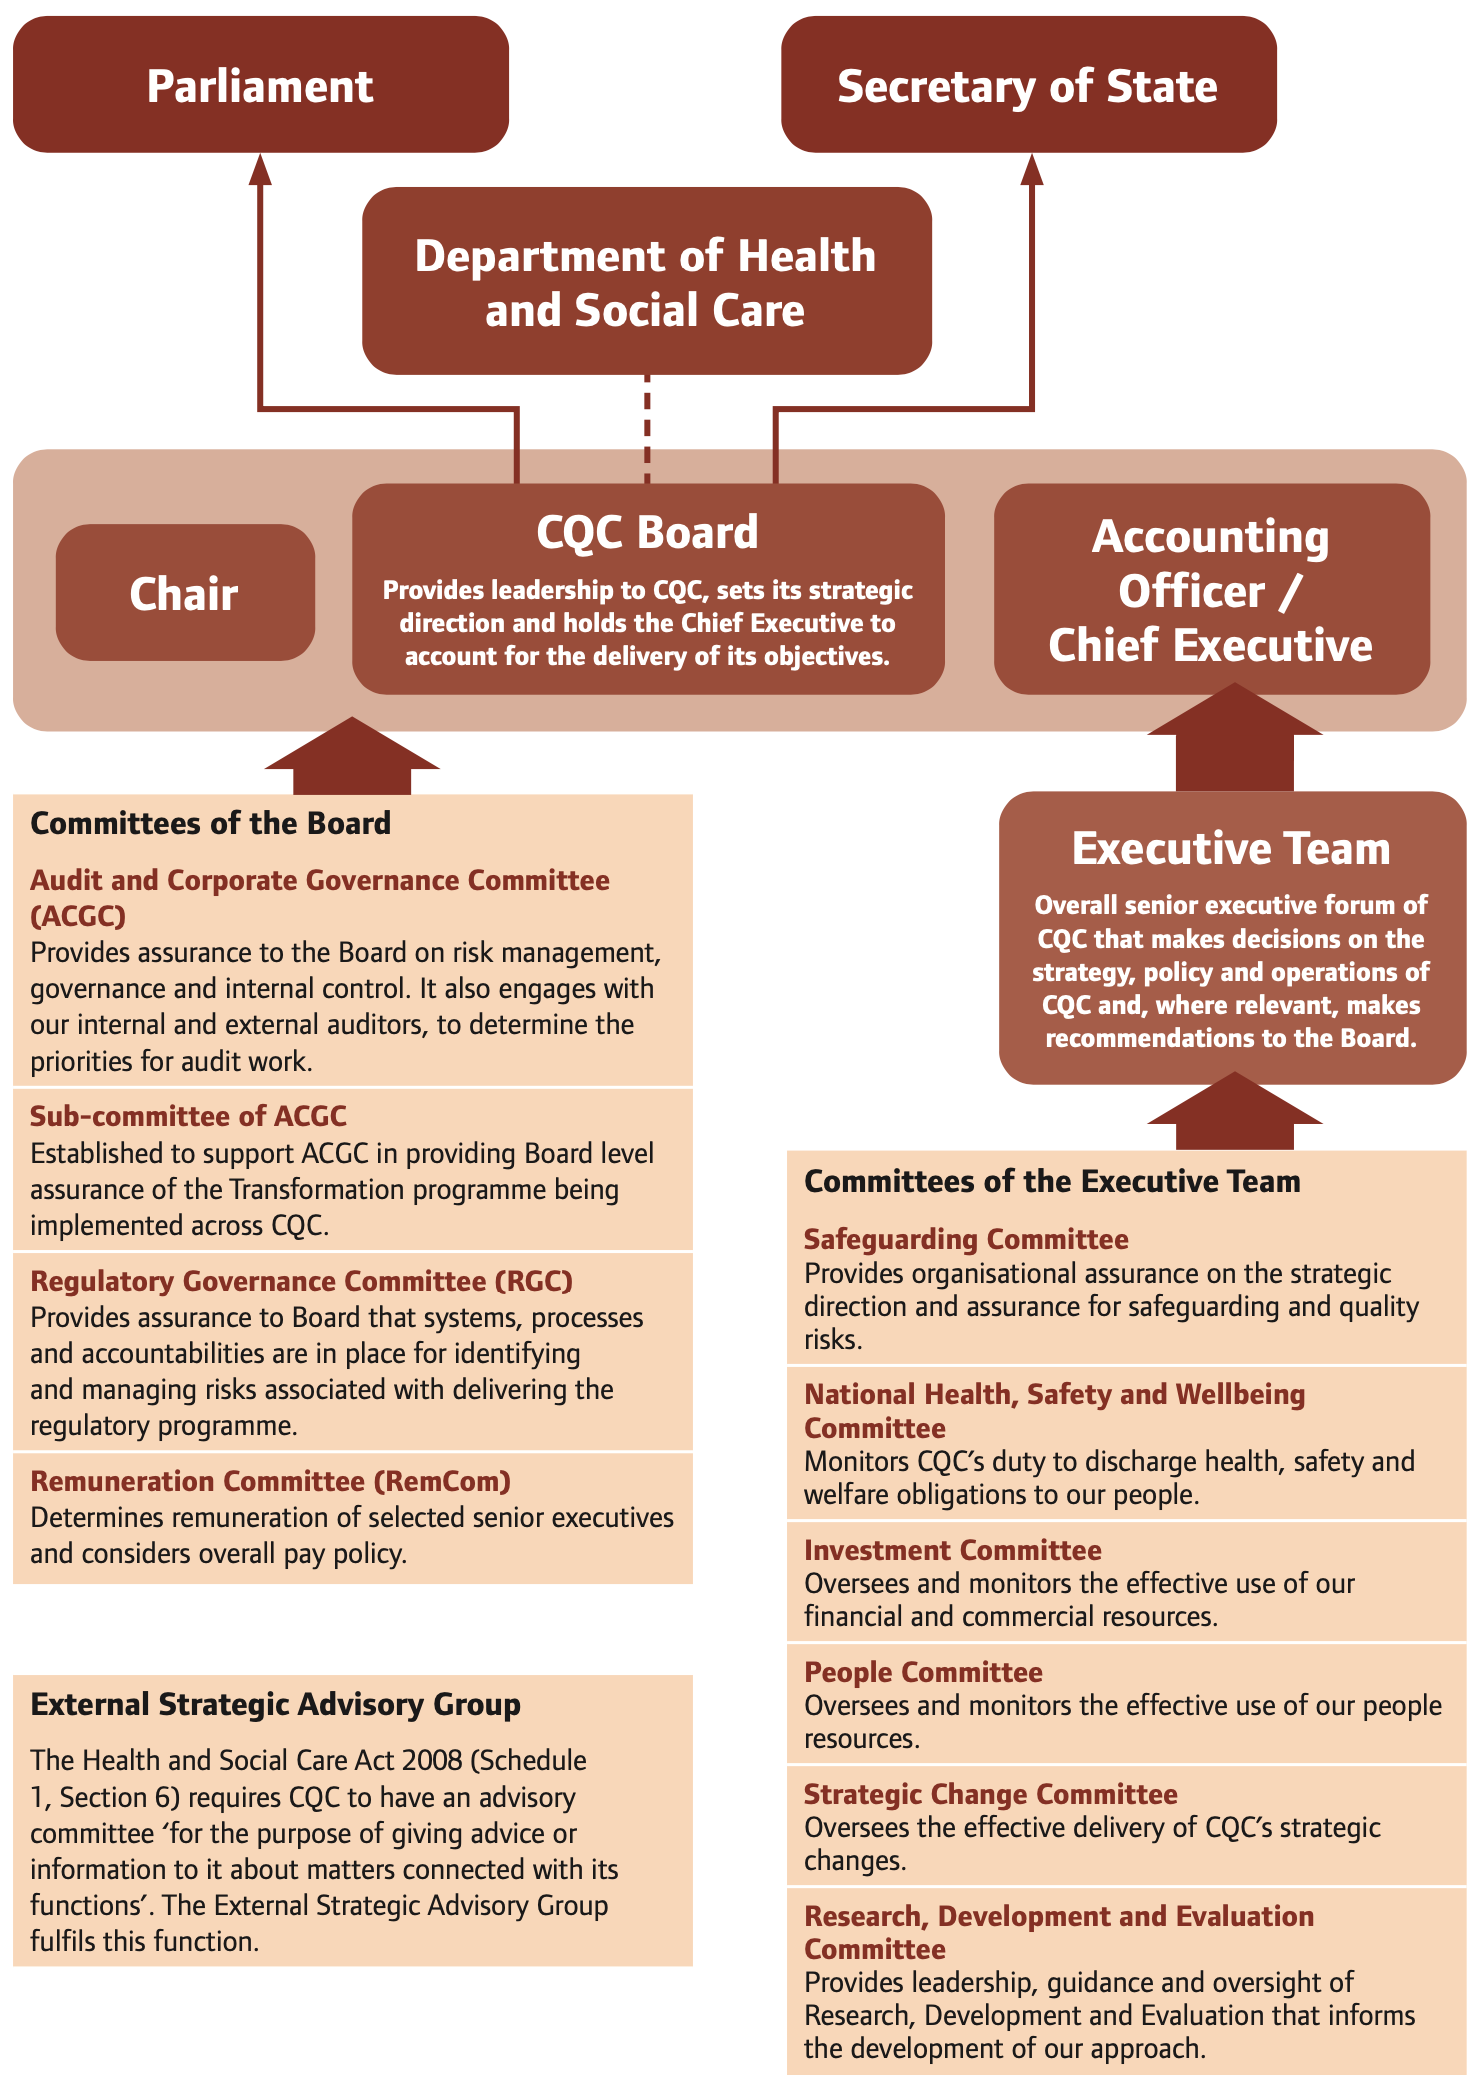 Diagram of CQC governance framework and structures, described in the alternative text description below